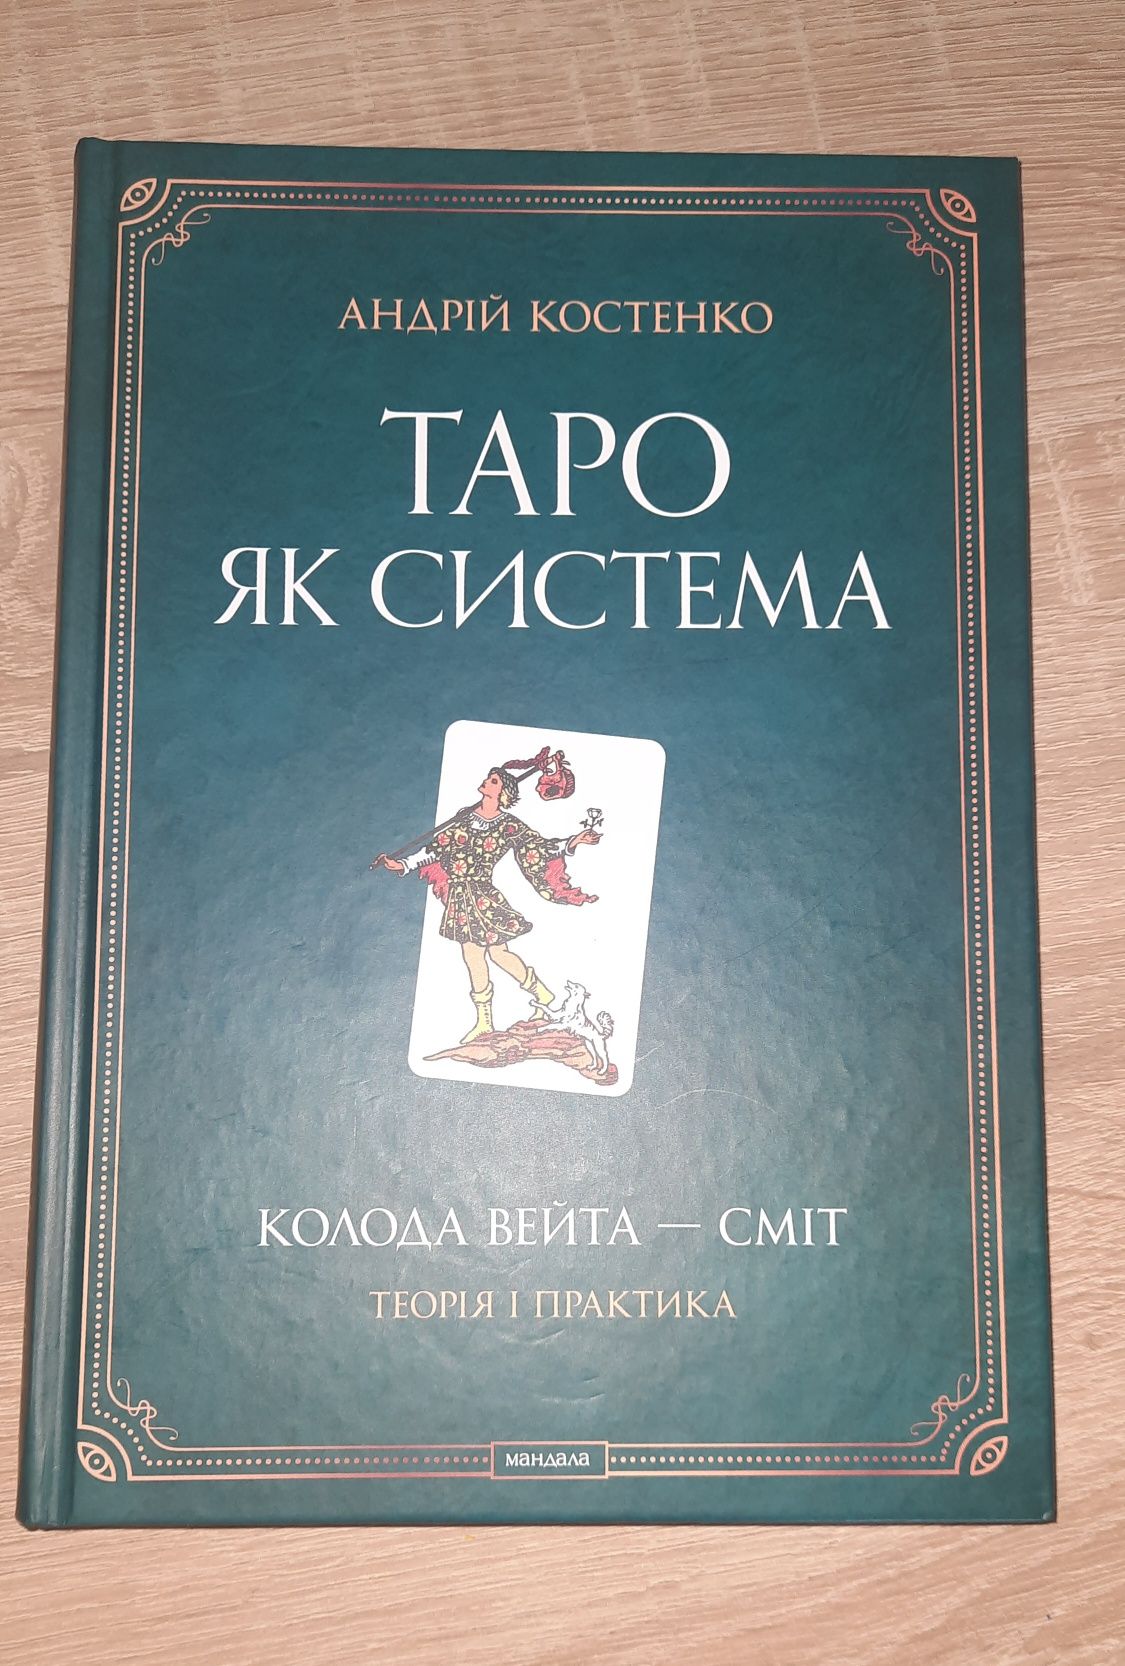 Книга про Таро Костенко Таро як система